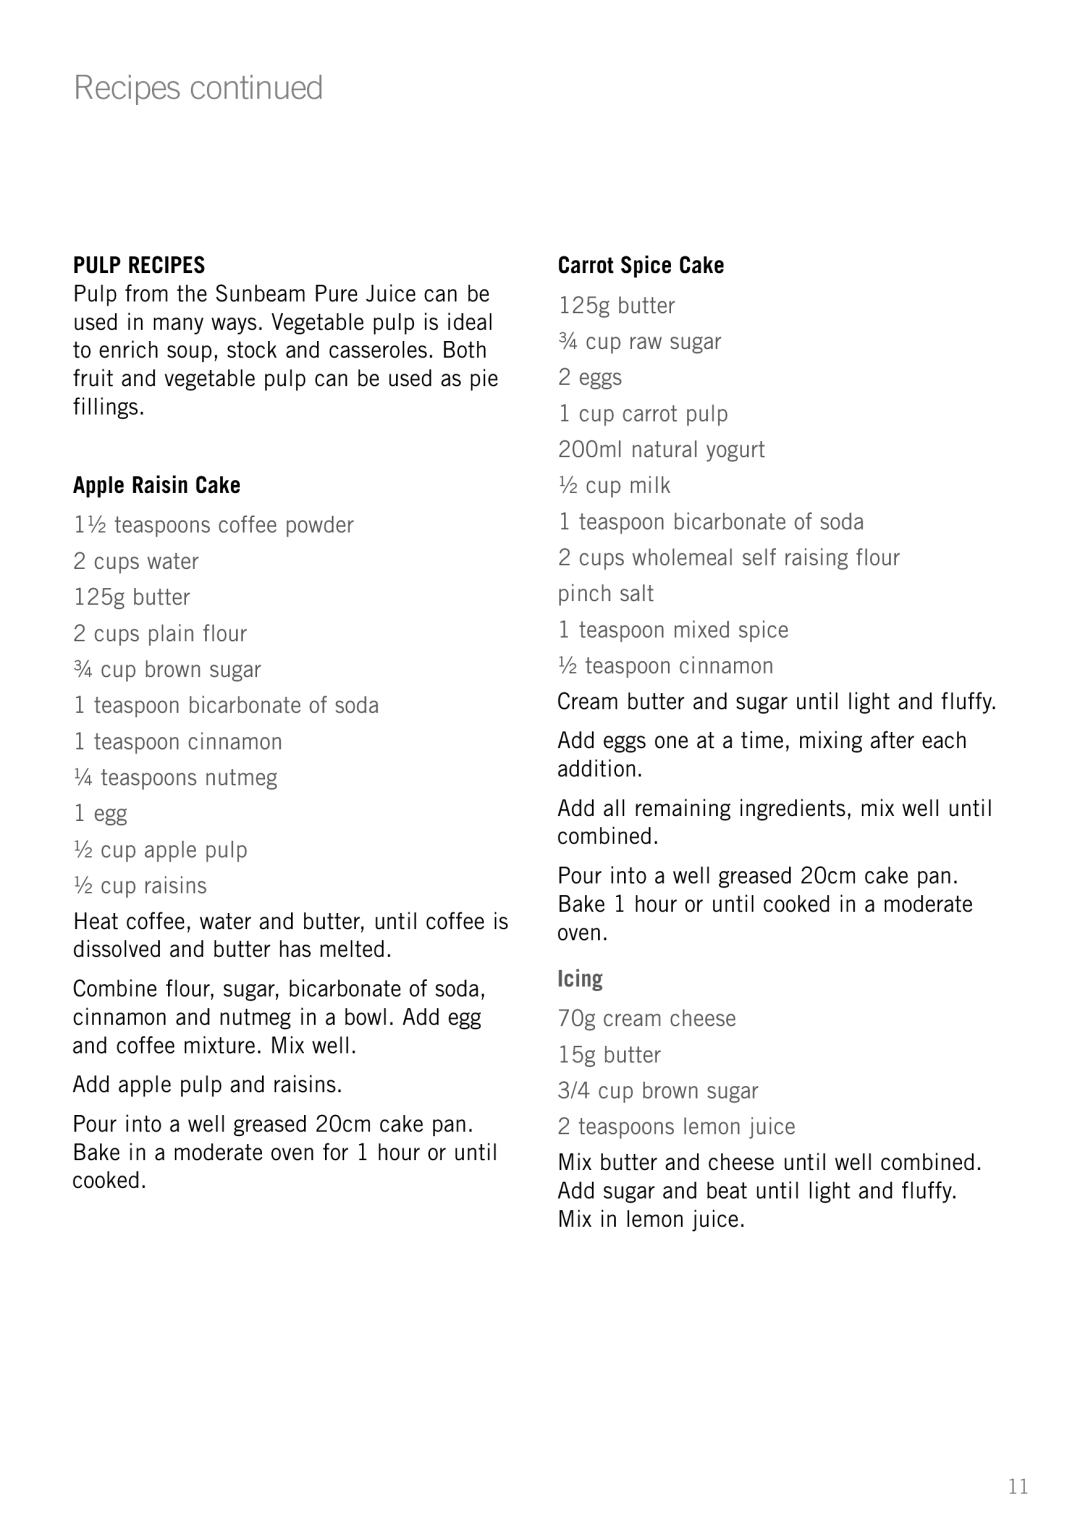 Sunbeam JE4700 manual Pulp Recipes, Apple Raisin Cake, Carrot Spice Cake, Recipes continued, Icing 